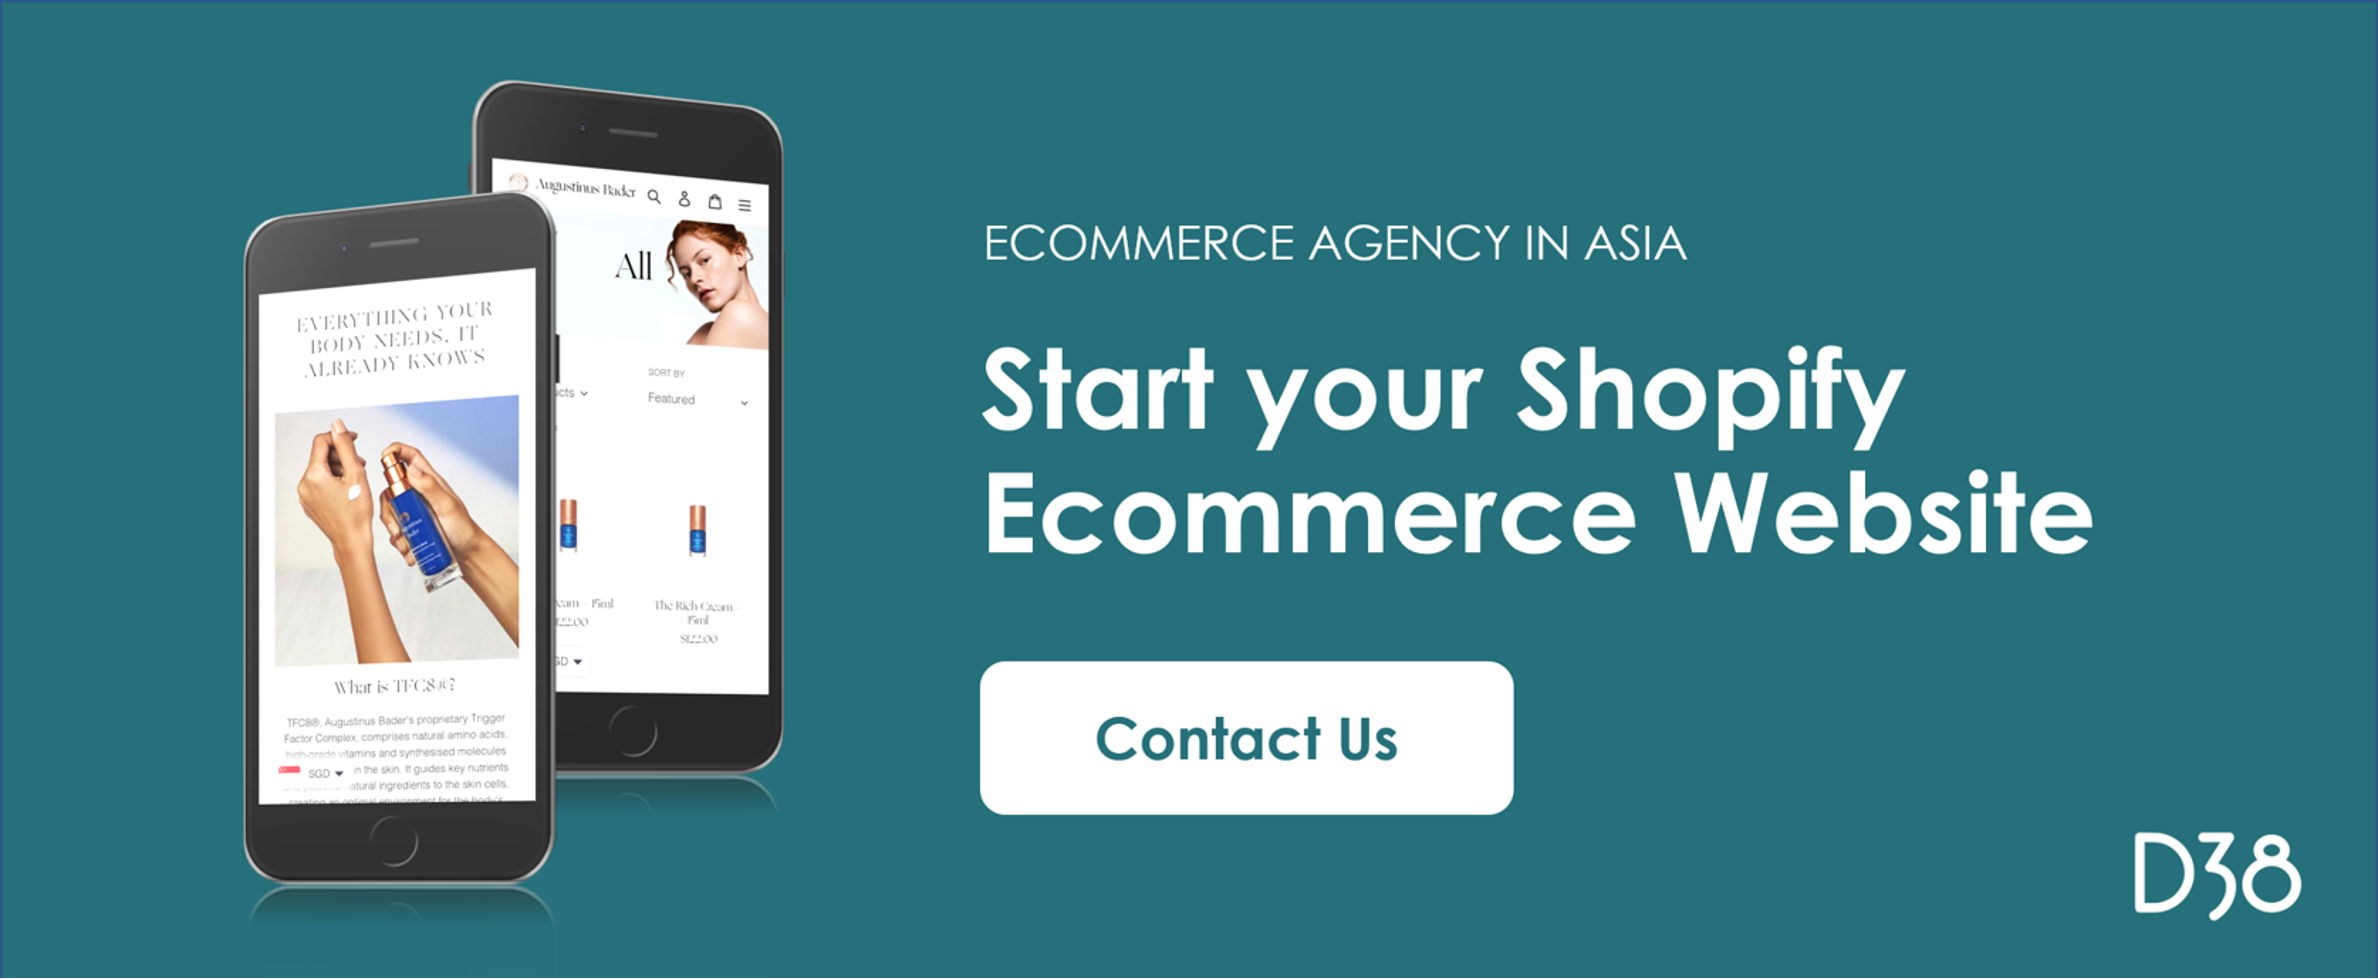 Start Your Shopify Ecommerce Website - Digital 38 Ecommerce Agency